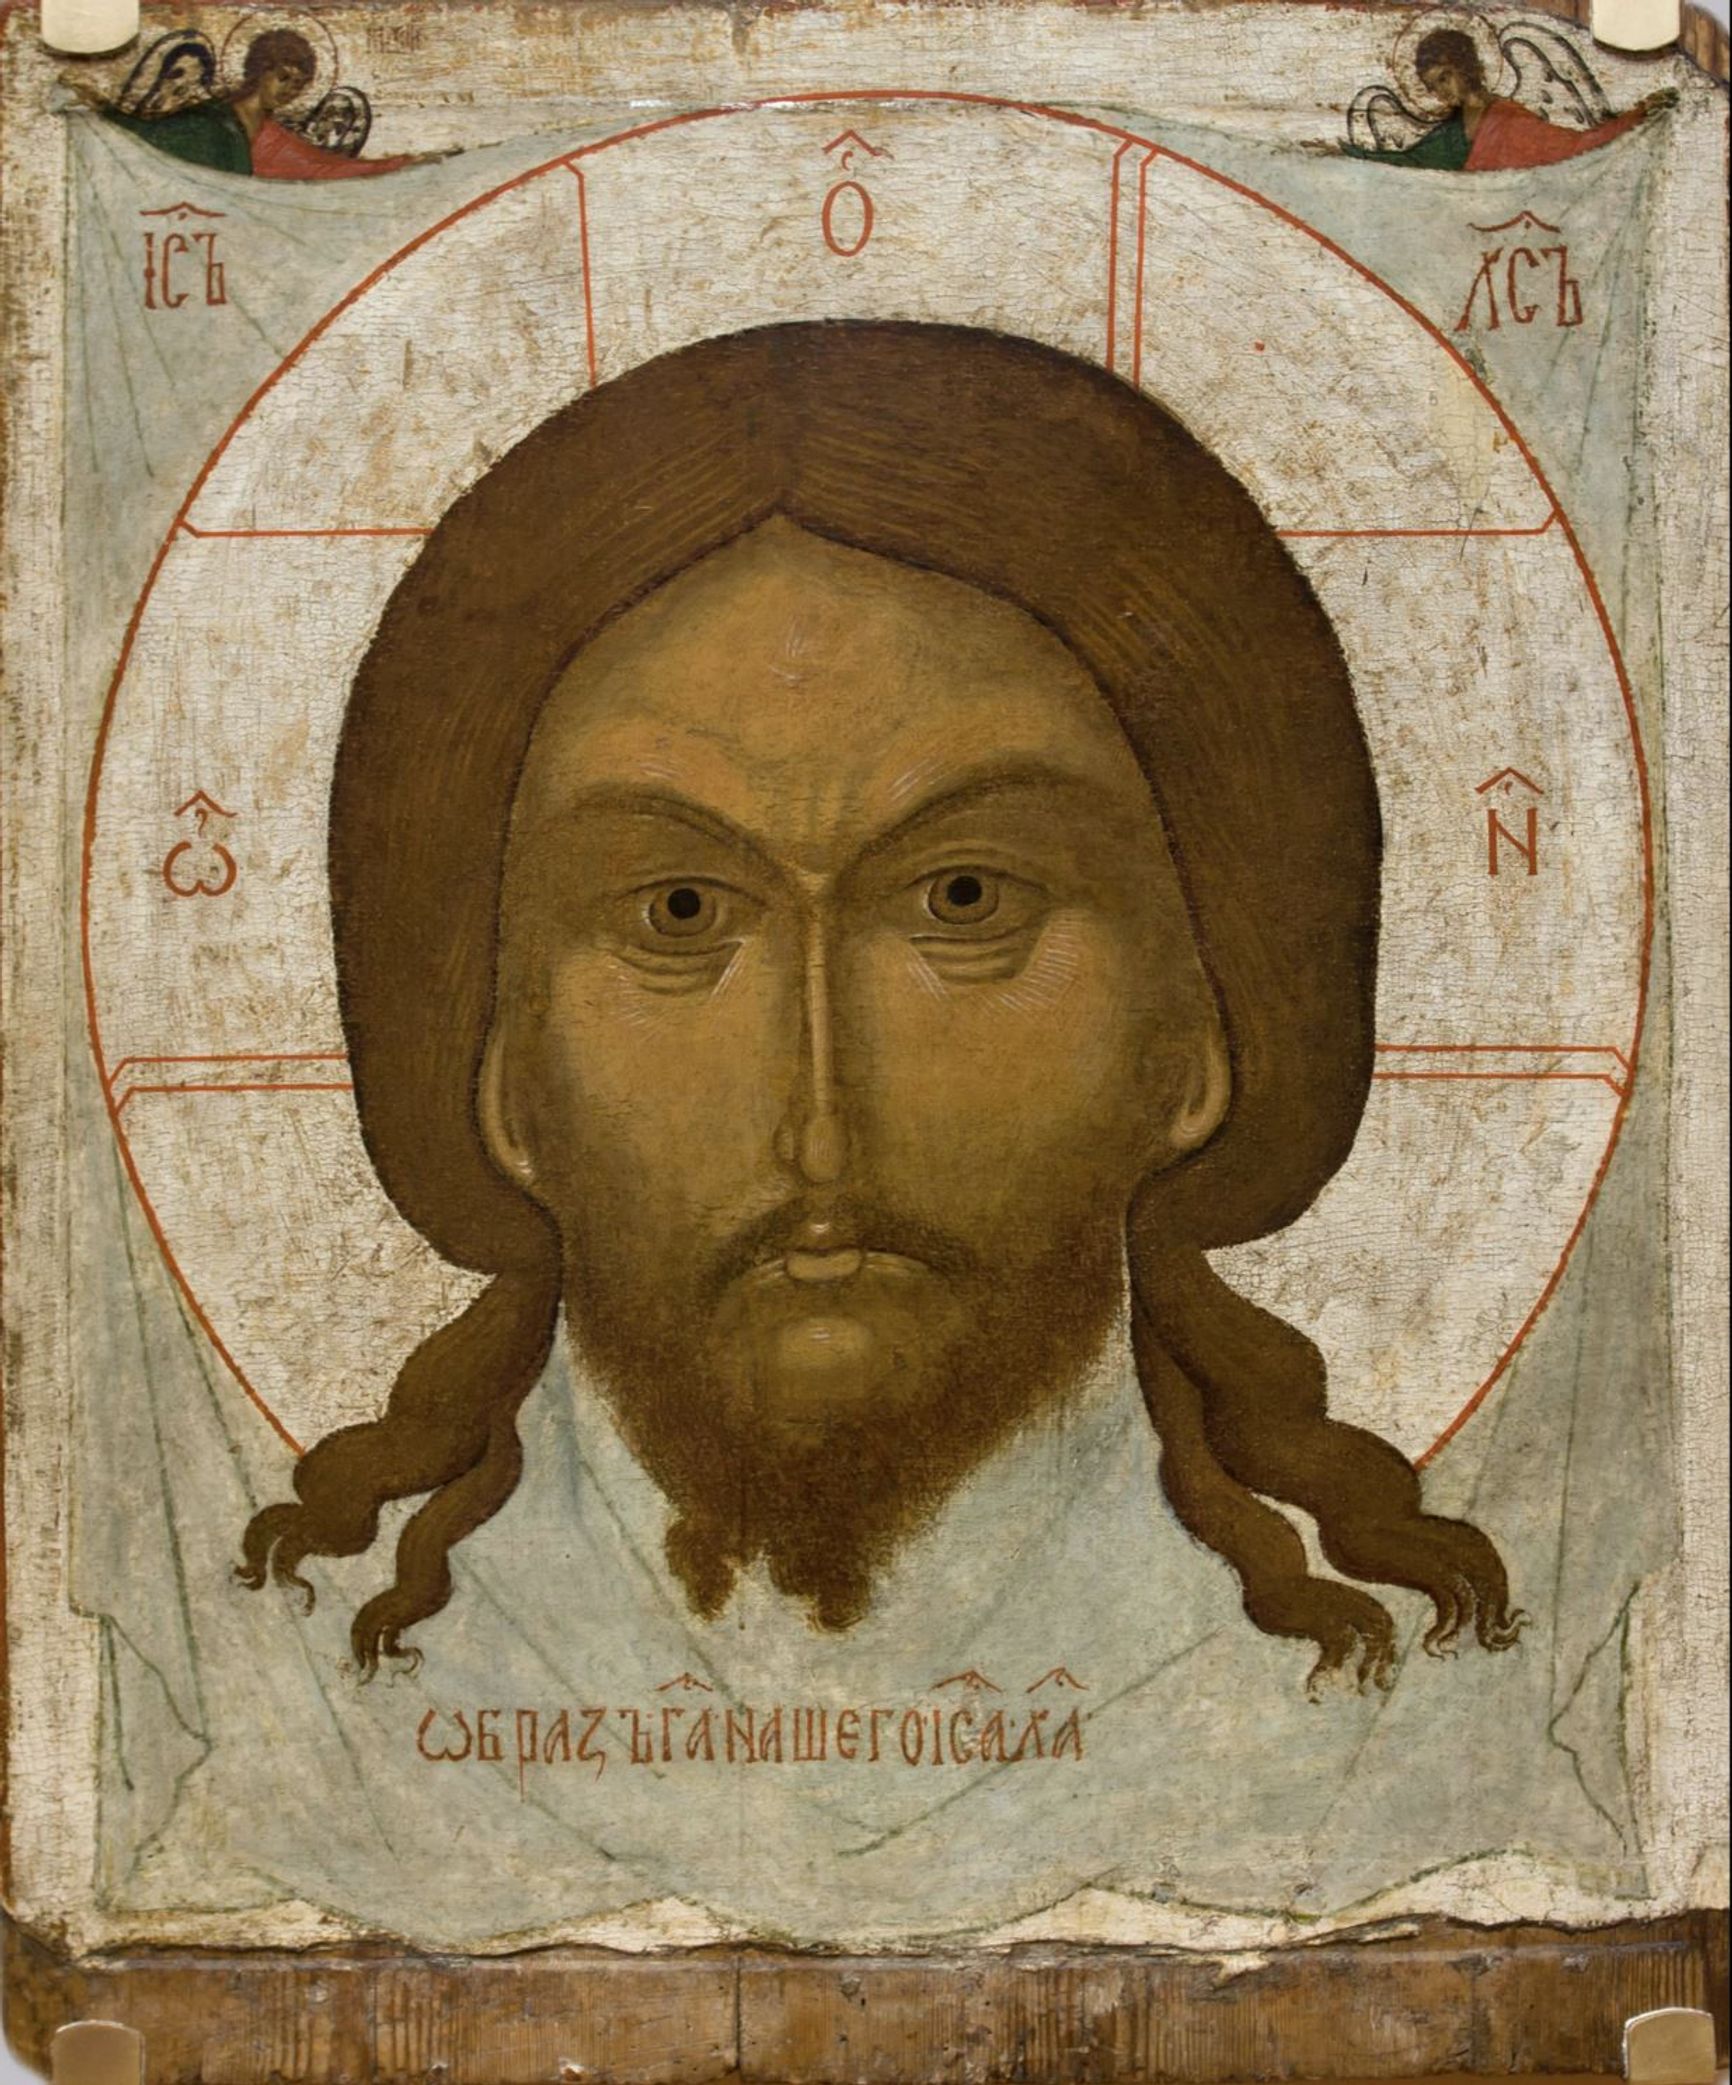 The most popular icon is the “Spas Nerukotvornyy” (Uncreated Savior)